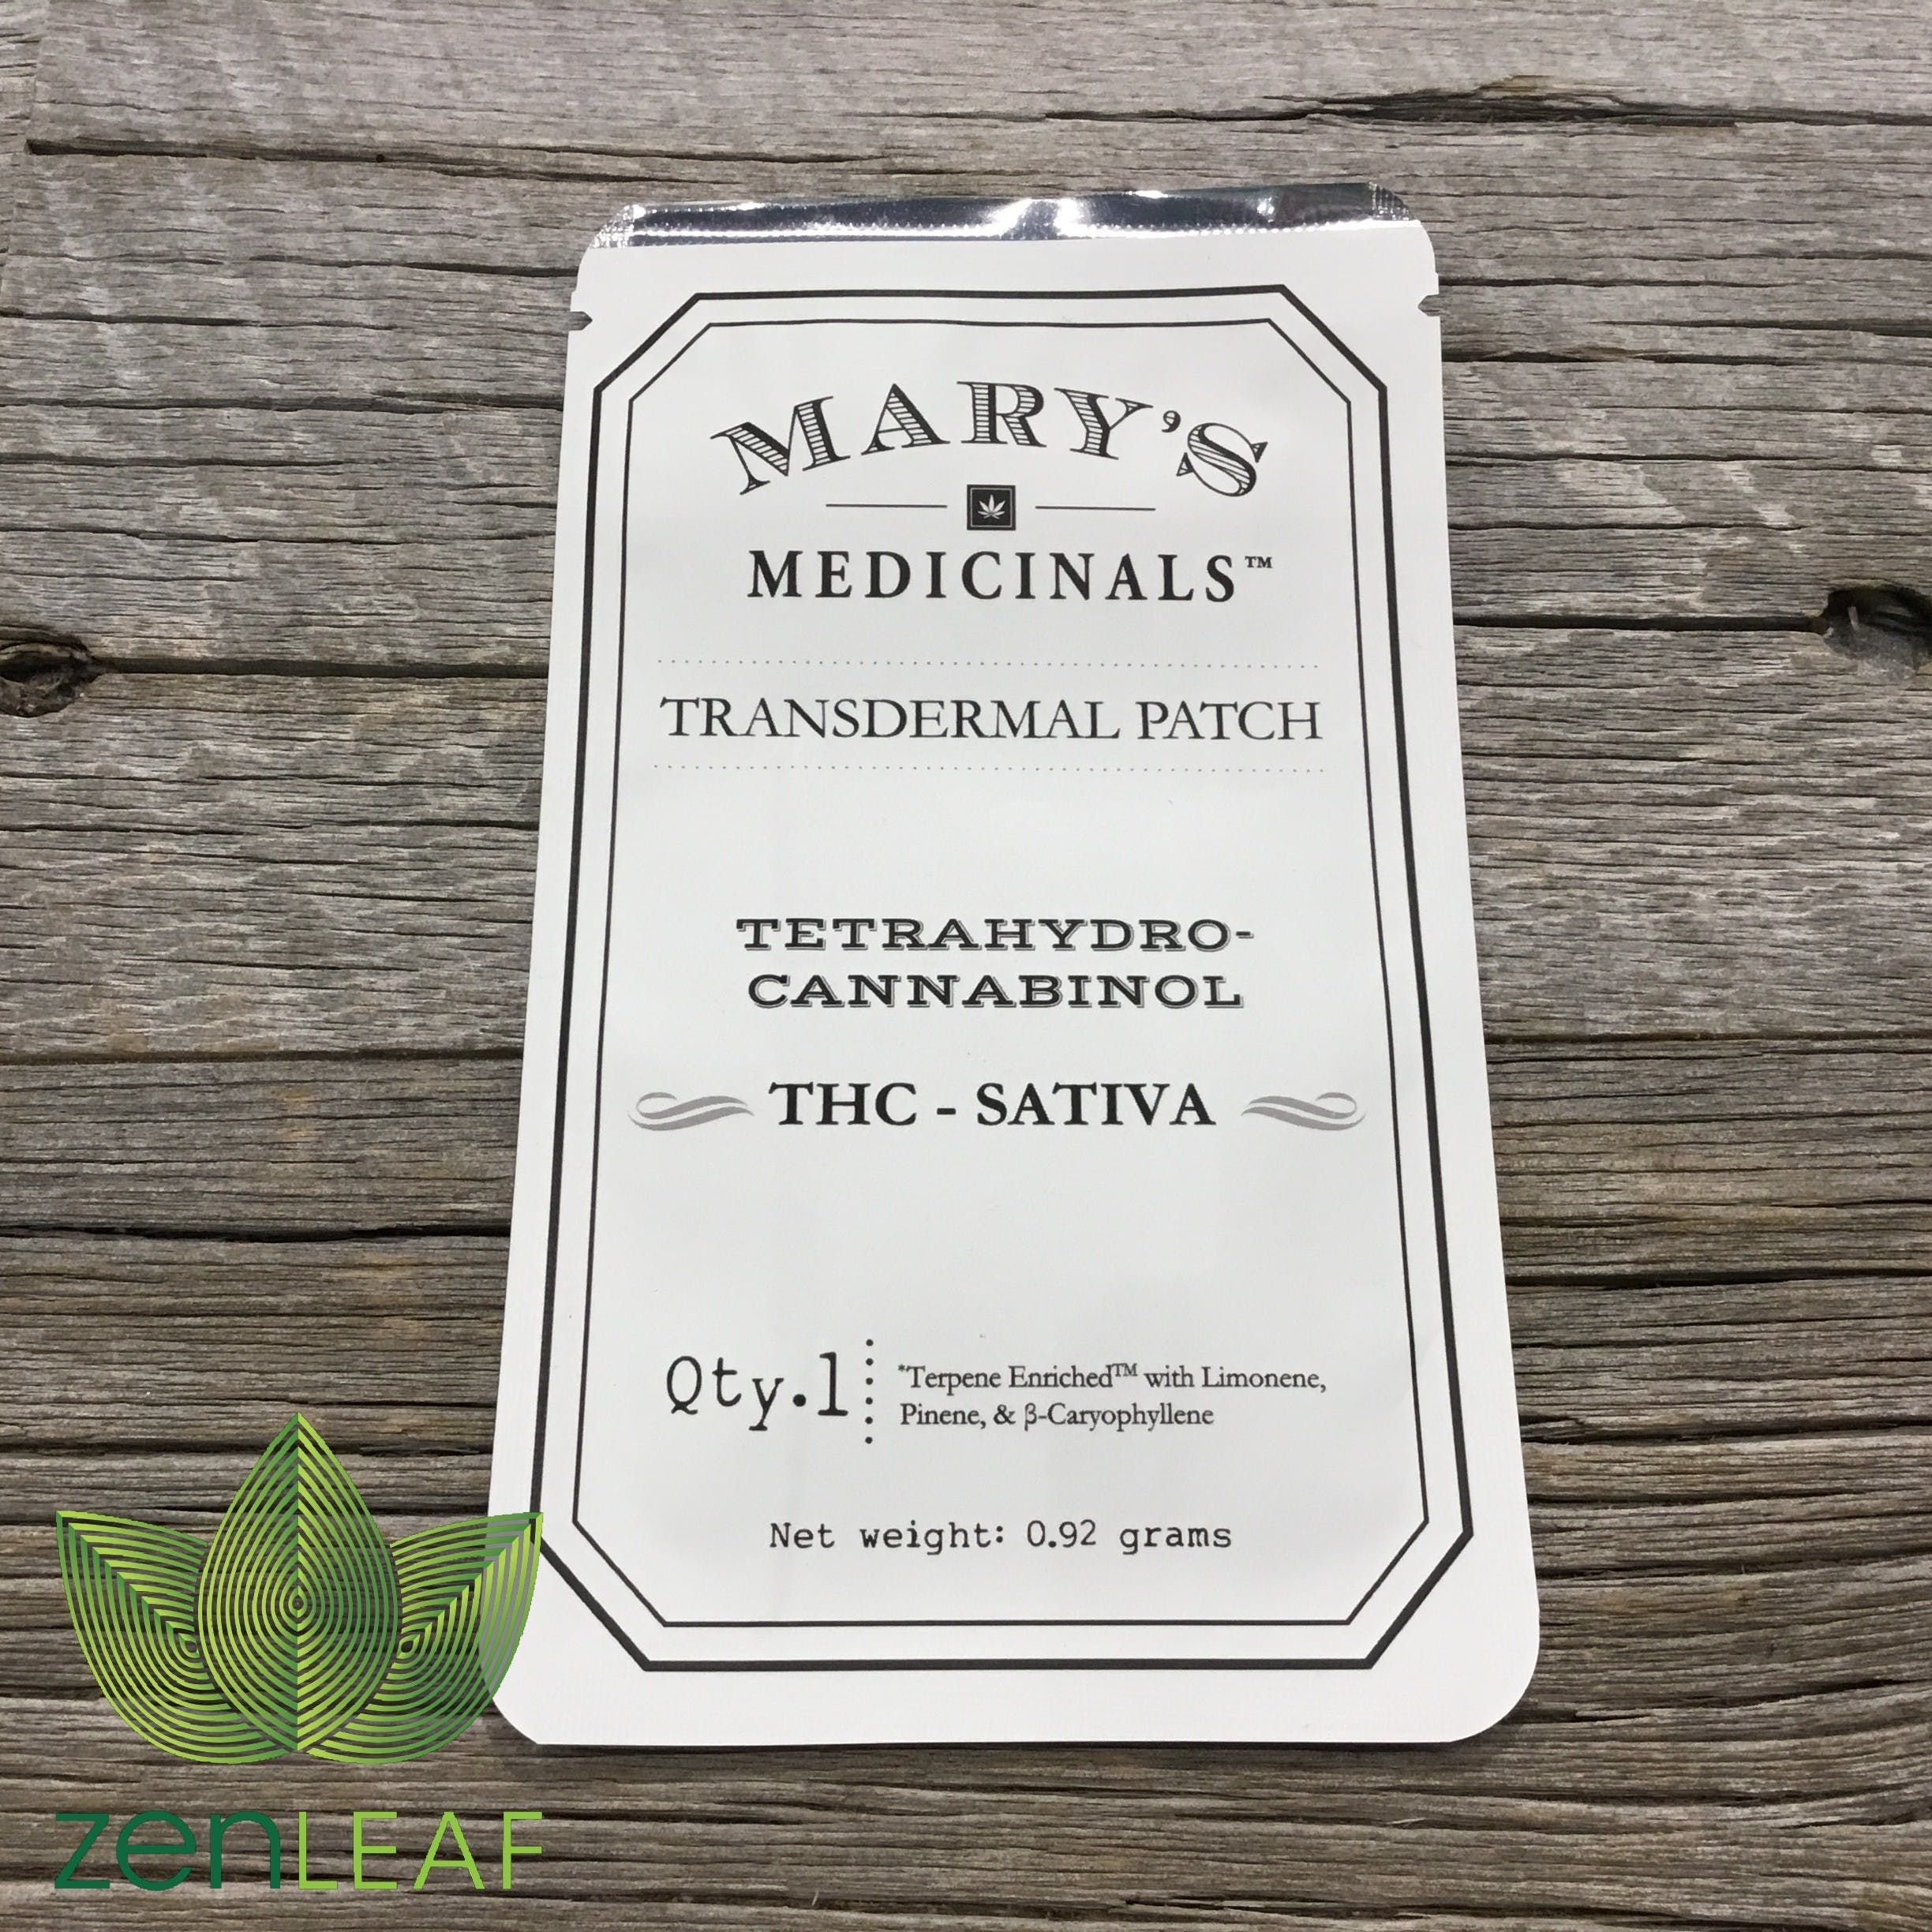 marijuana-dispensaries-2290-old-washington-road-unit-12383-waldorf-marys-transdermal-patch-thc-sativa